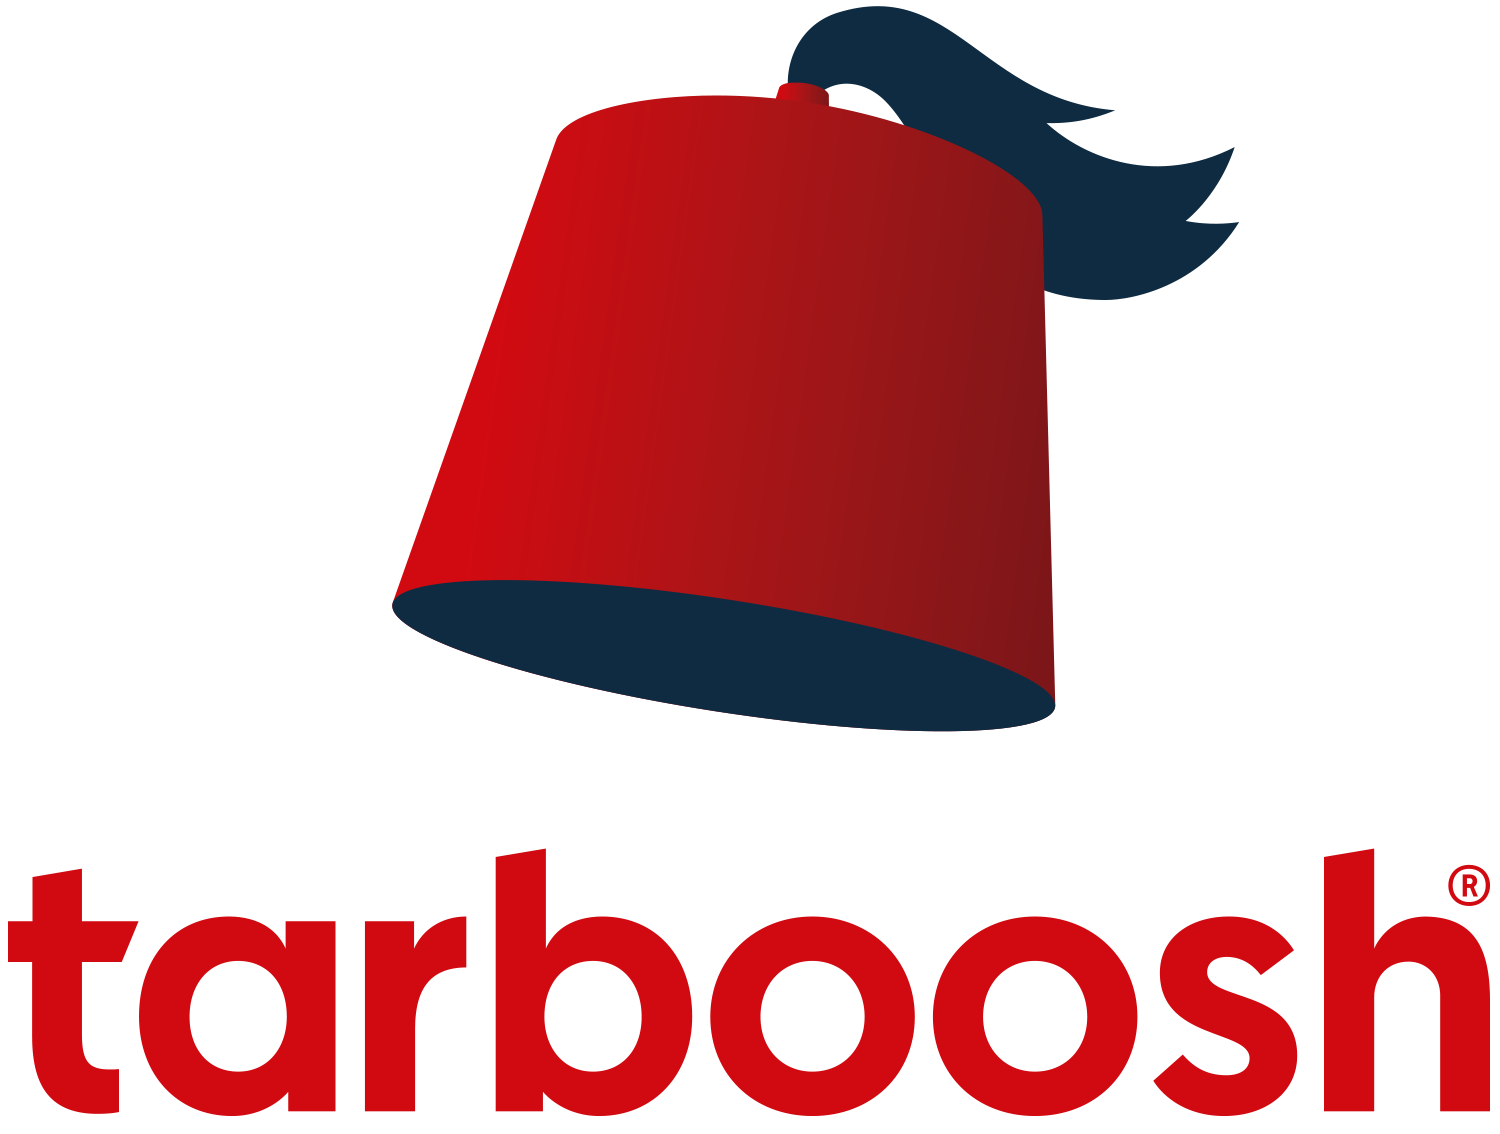 Logo - Tarboosh